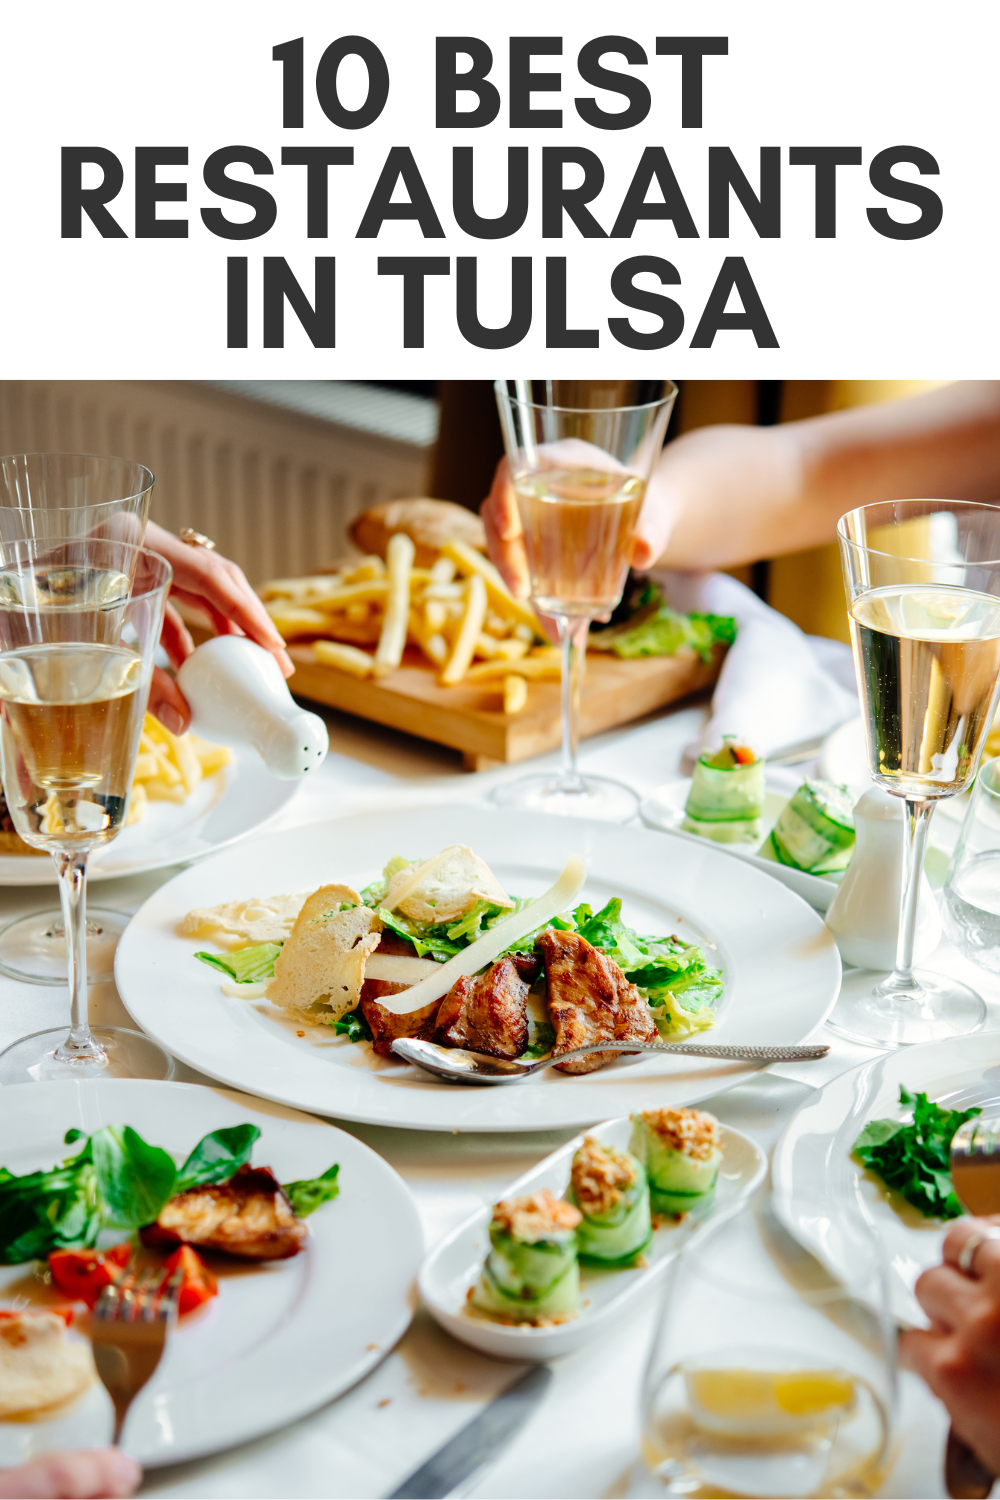 10 Best Restaurants in Tulsa MC Life Tulsa Apartment Communities